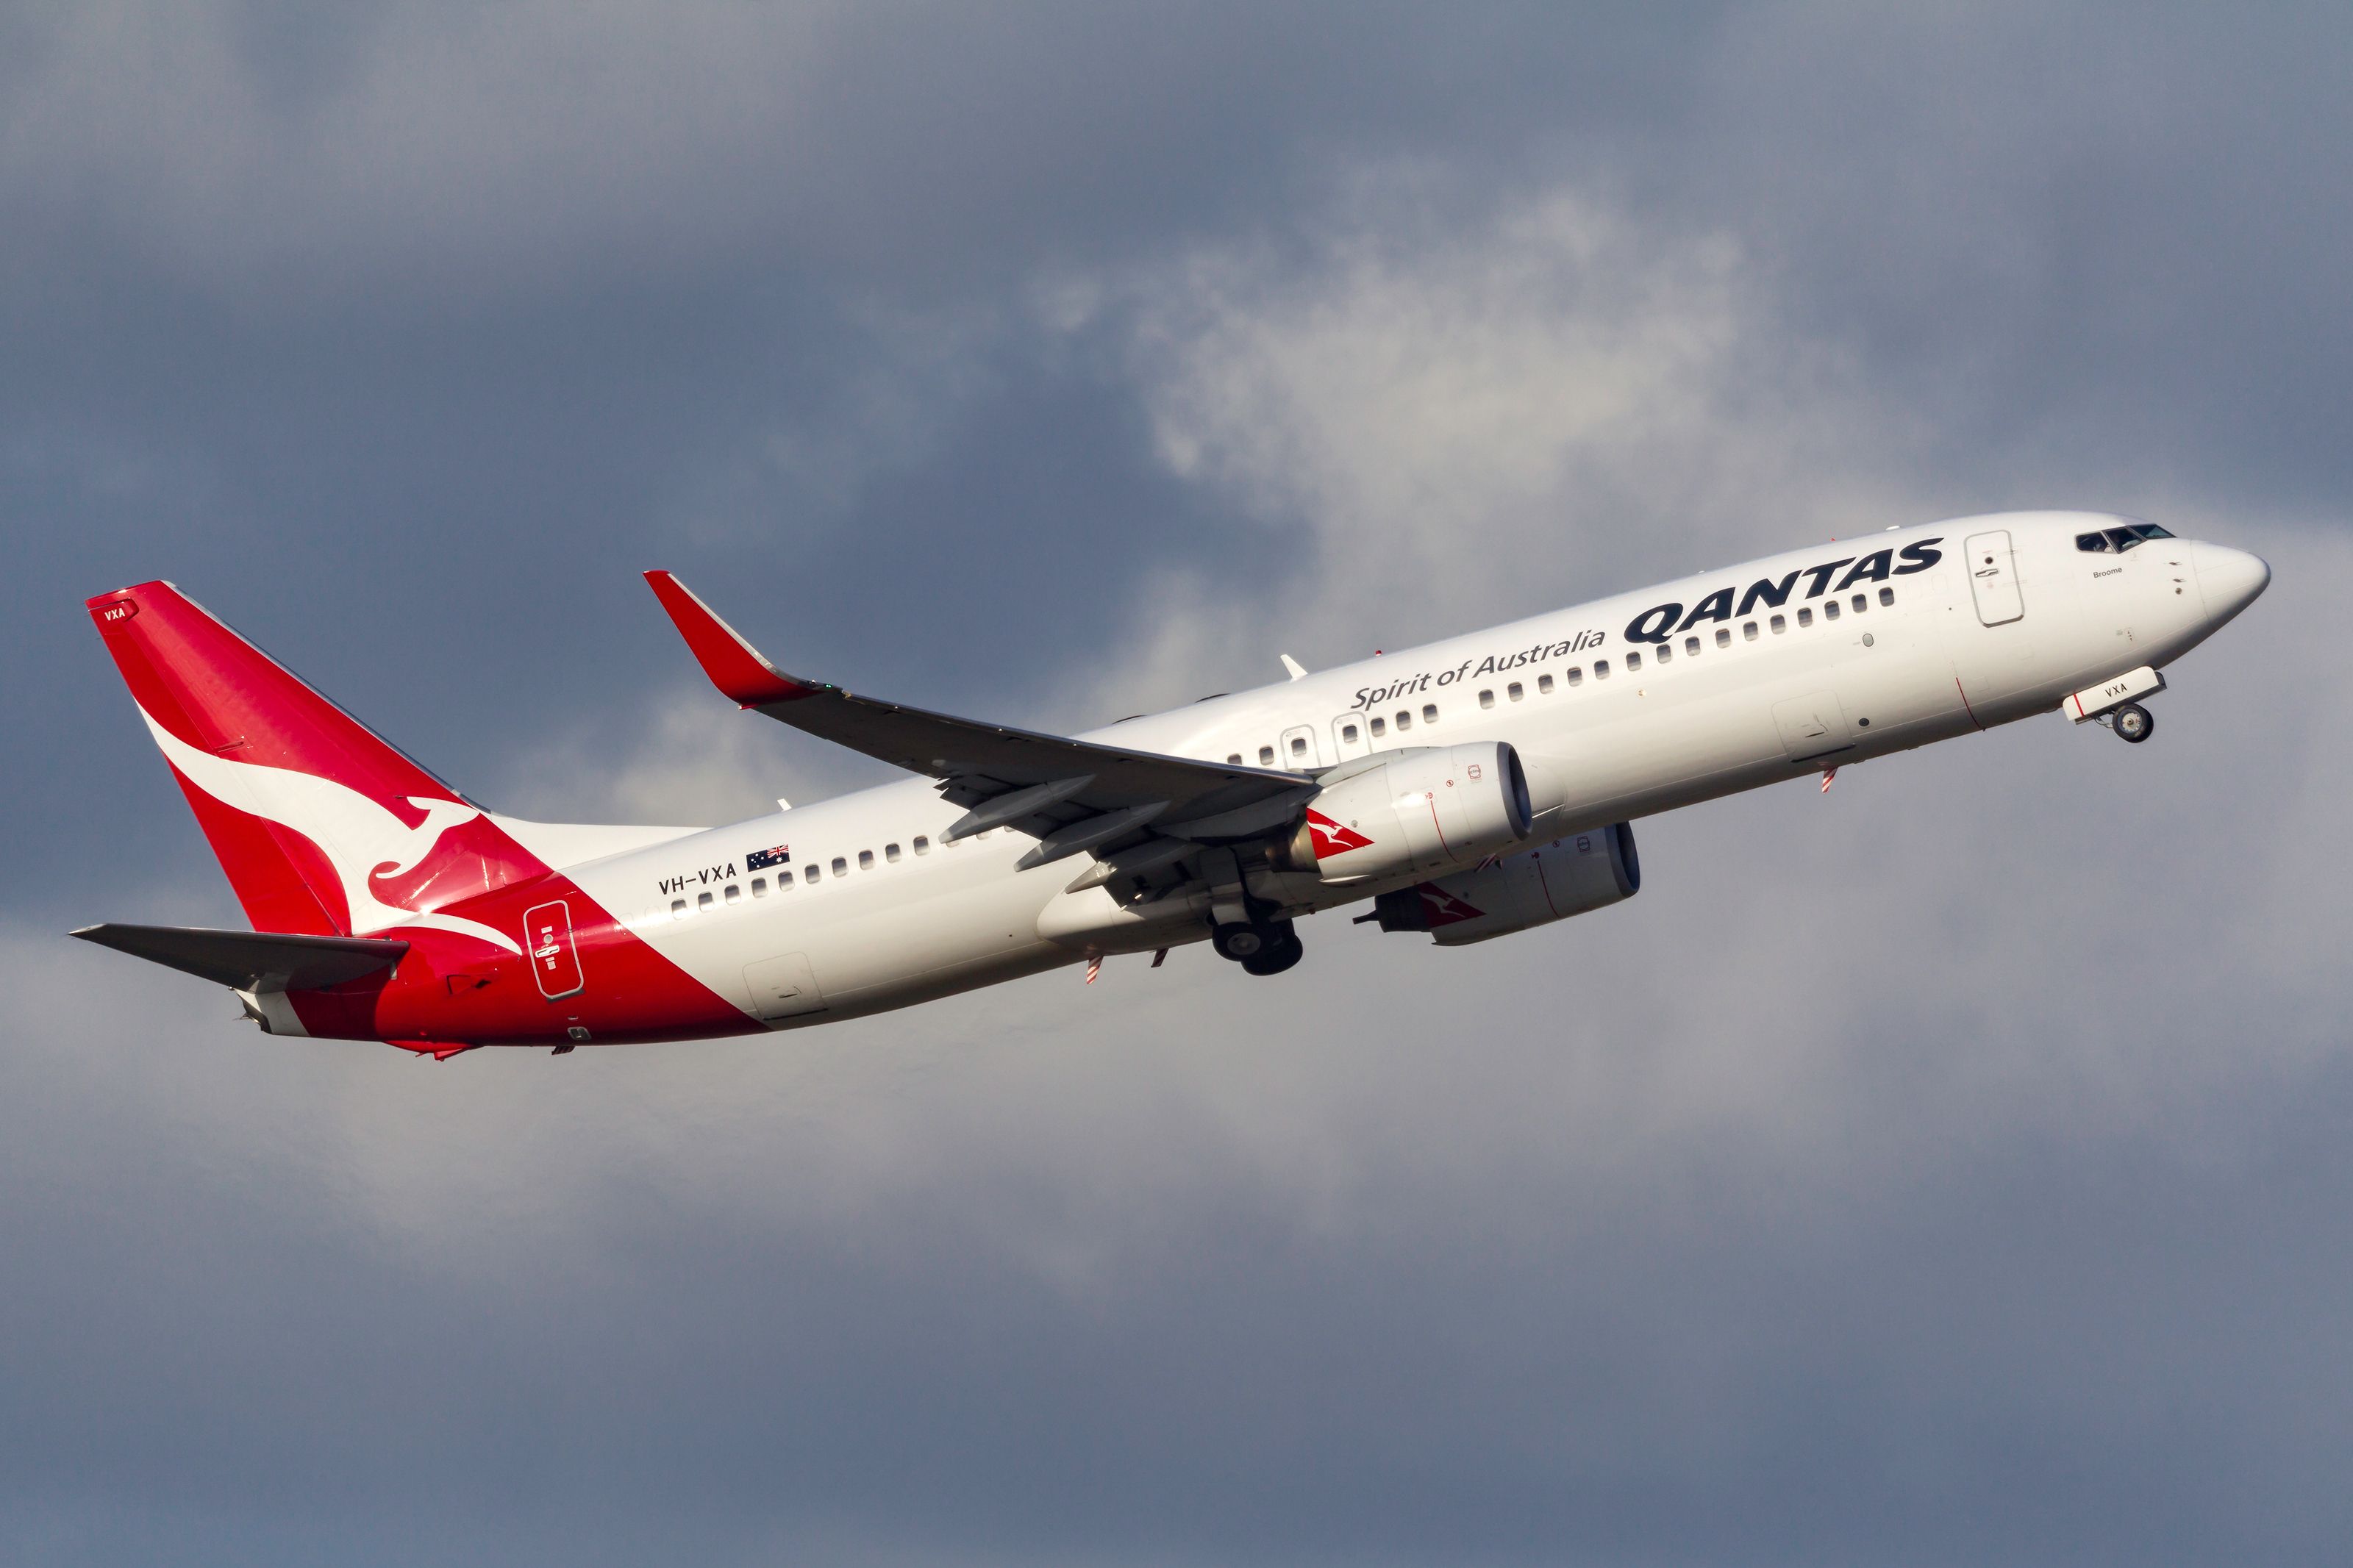 Boeing 737-838 VH-VXA departing Melbourne International Airport.